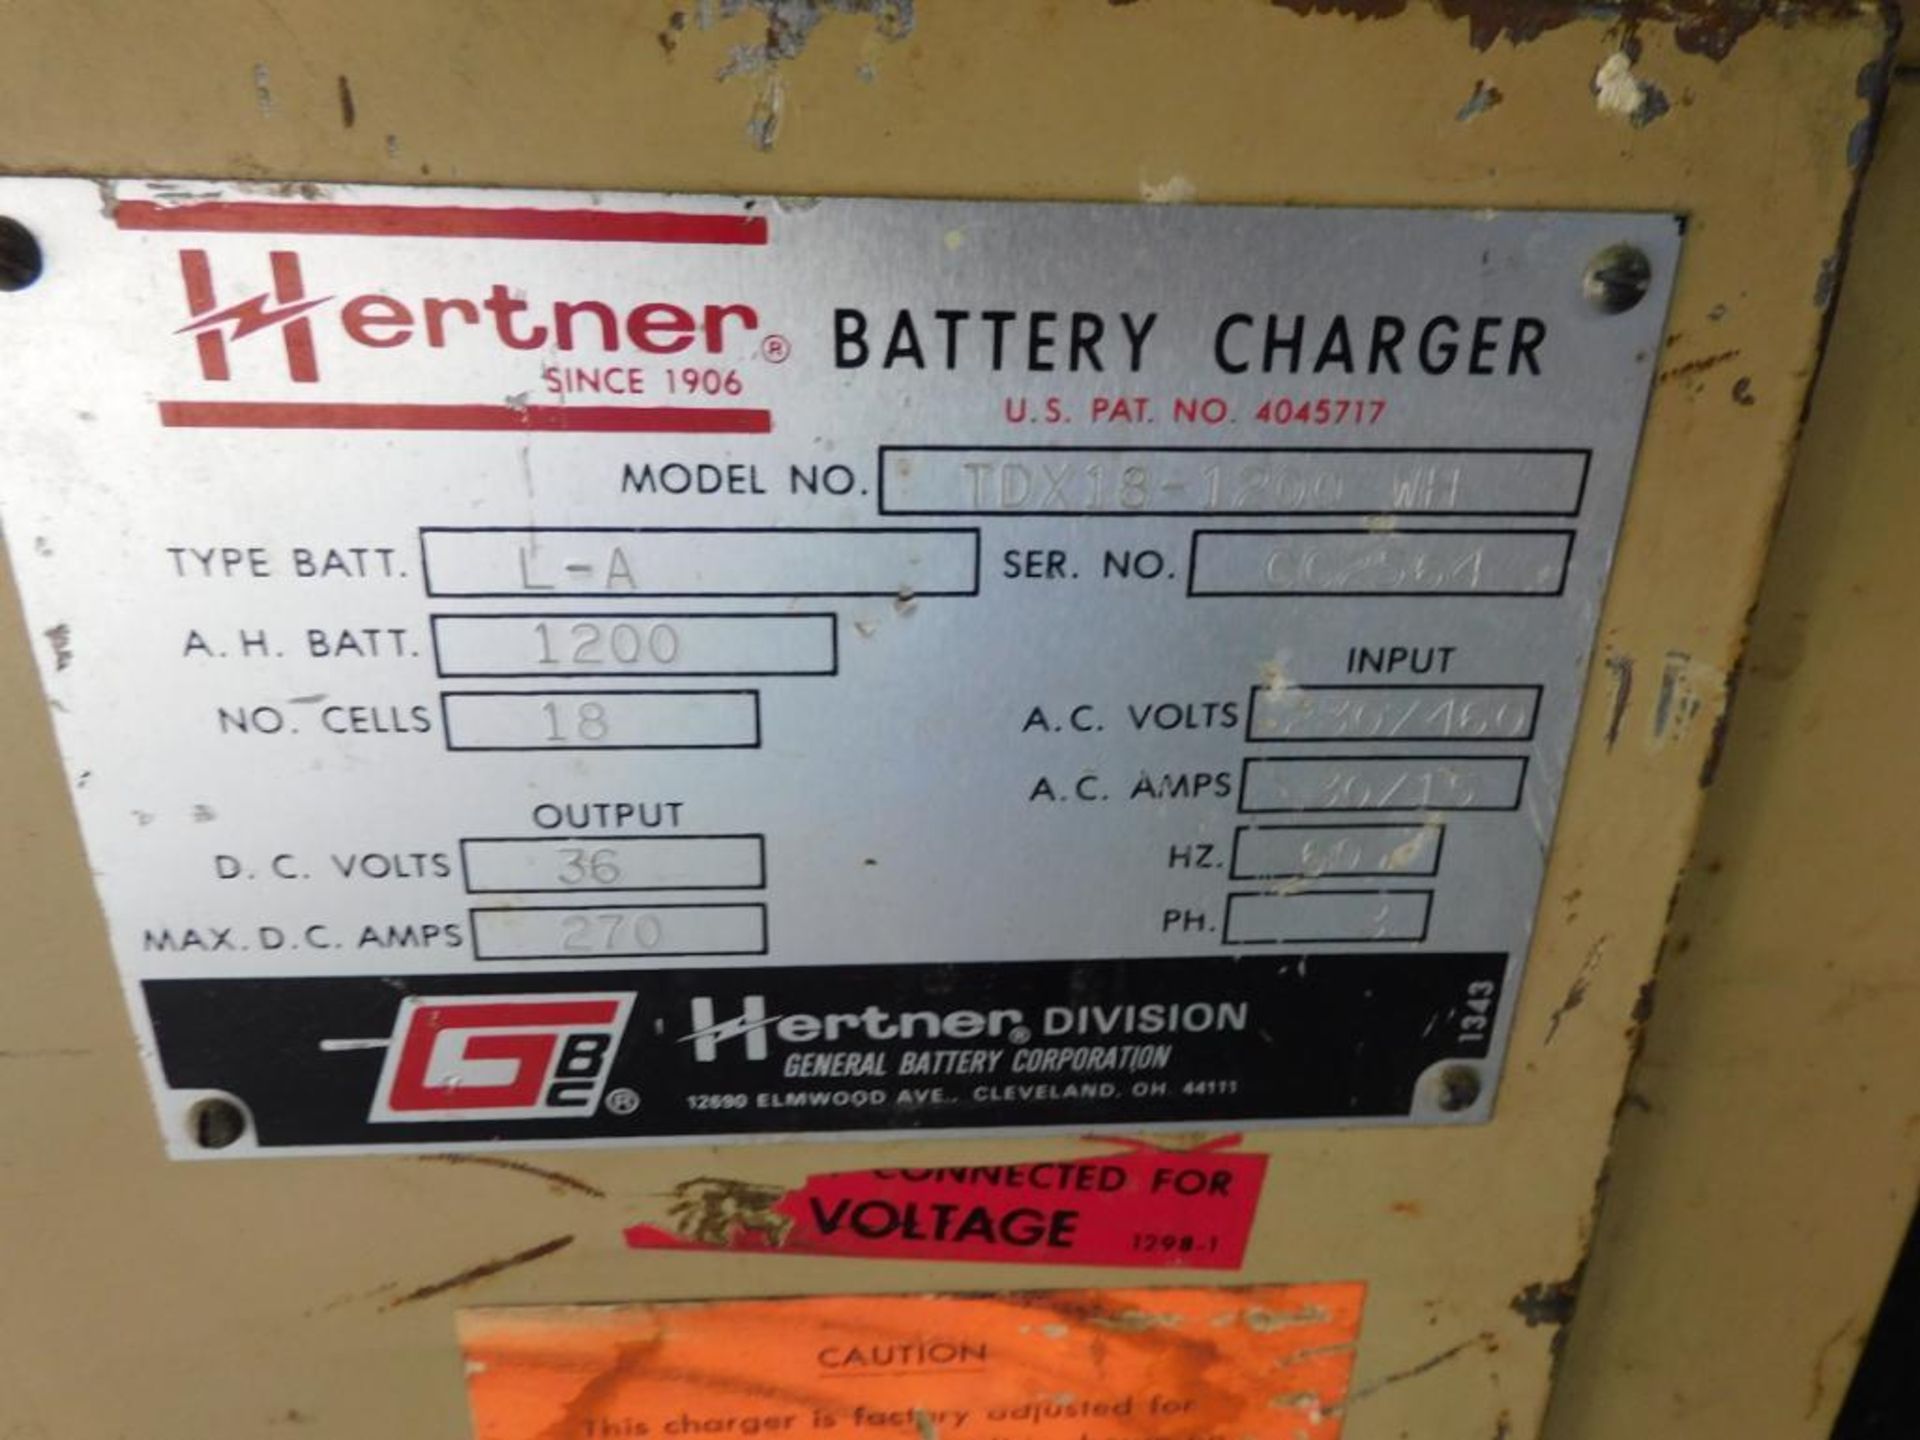 Hertner Battery Charger Model TDX/18-1200 WH, S/N CC2564 - Image 2 of 2